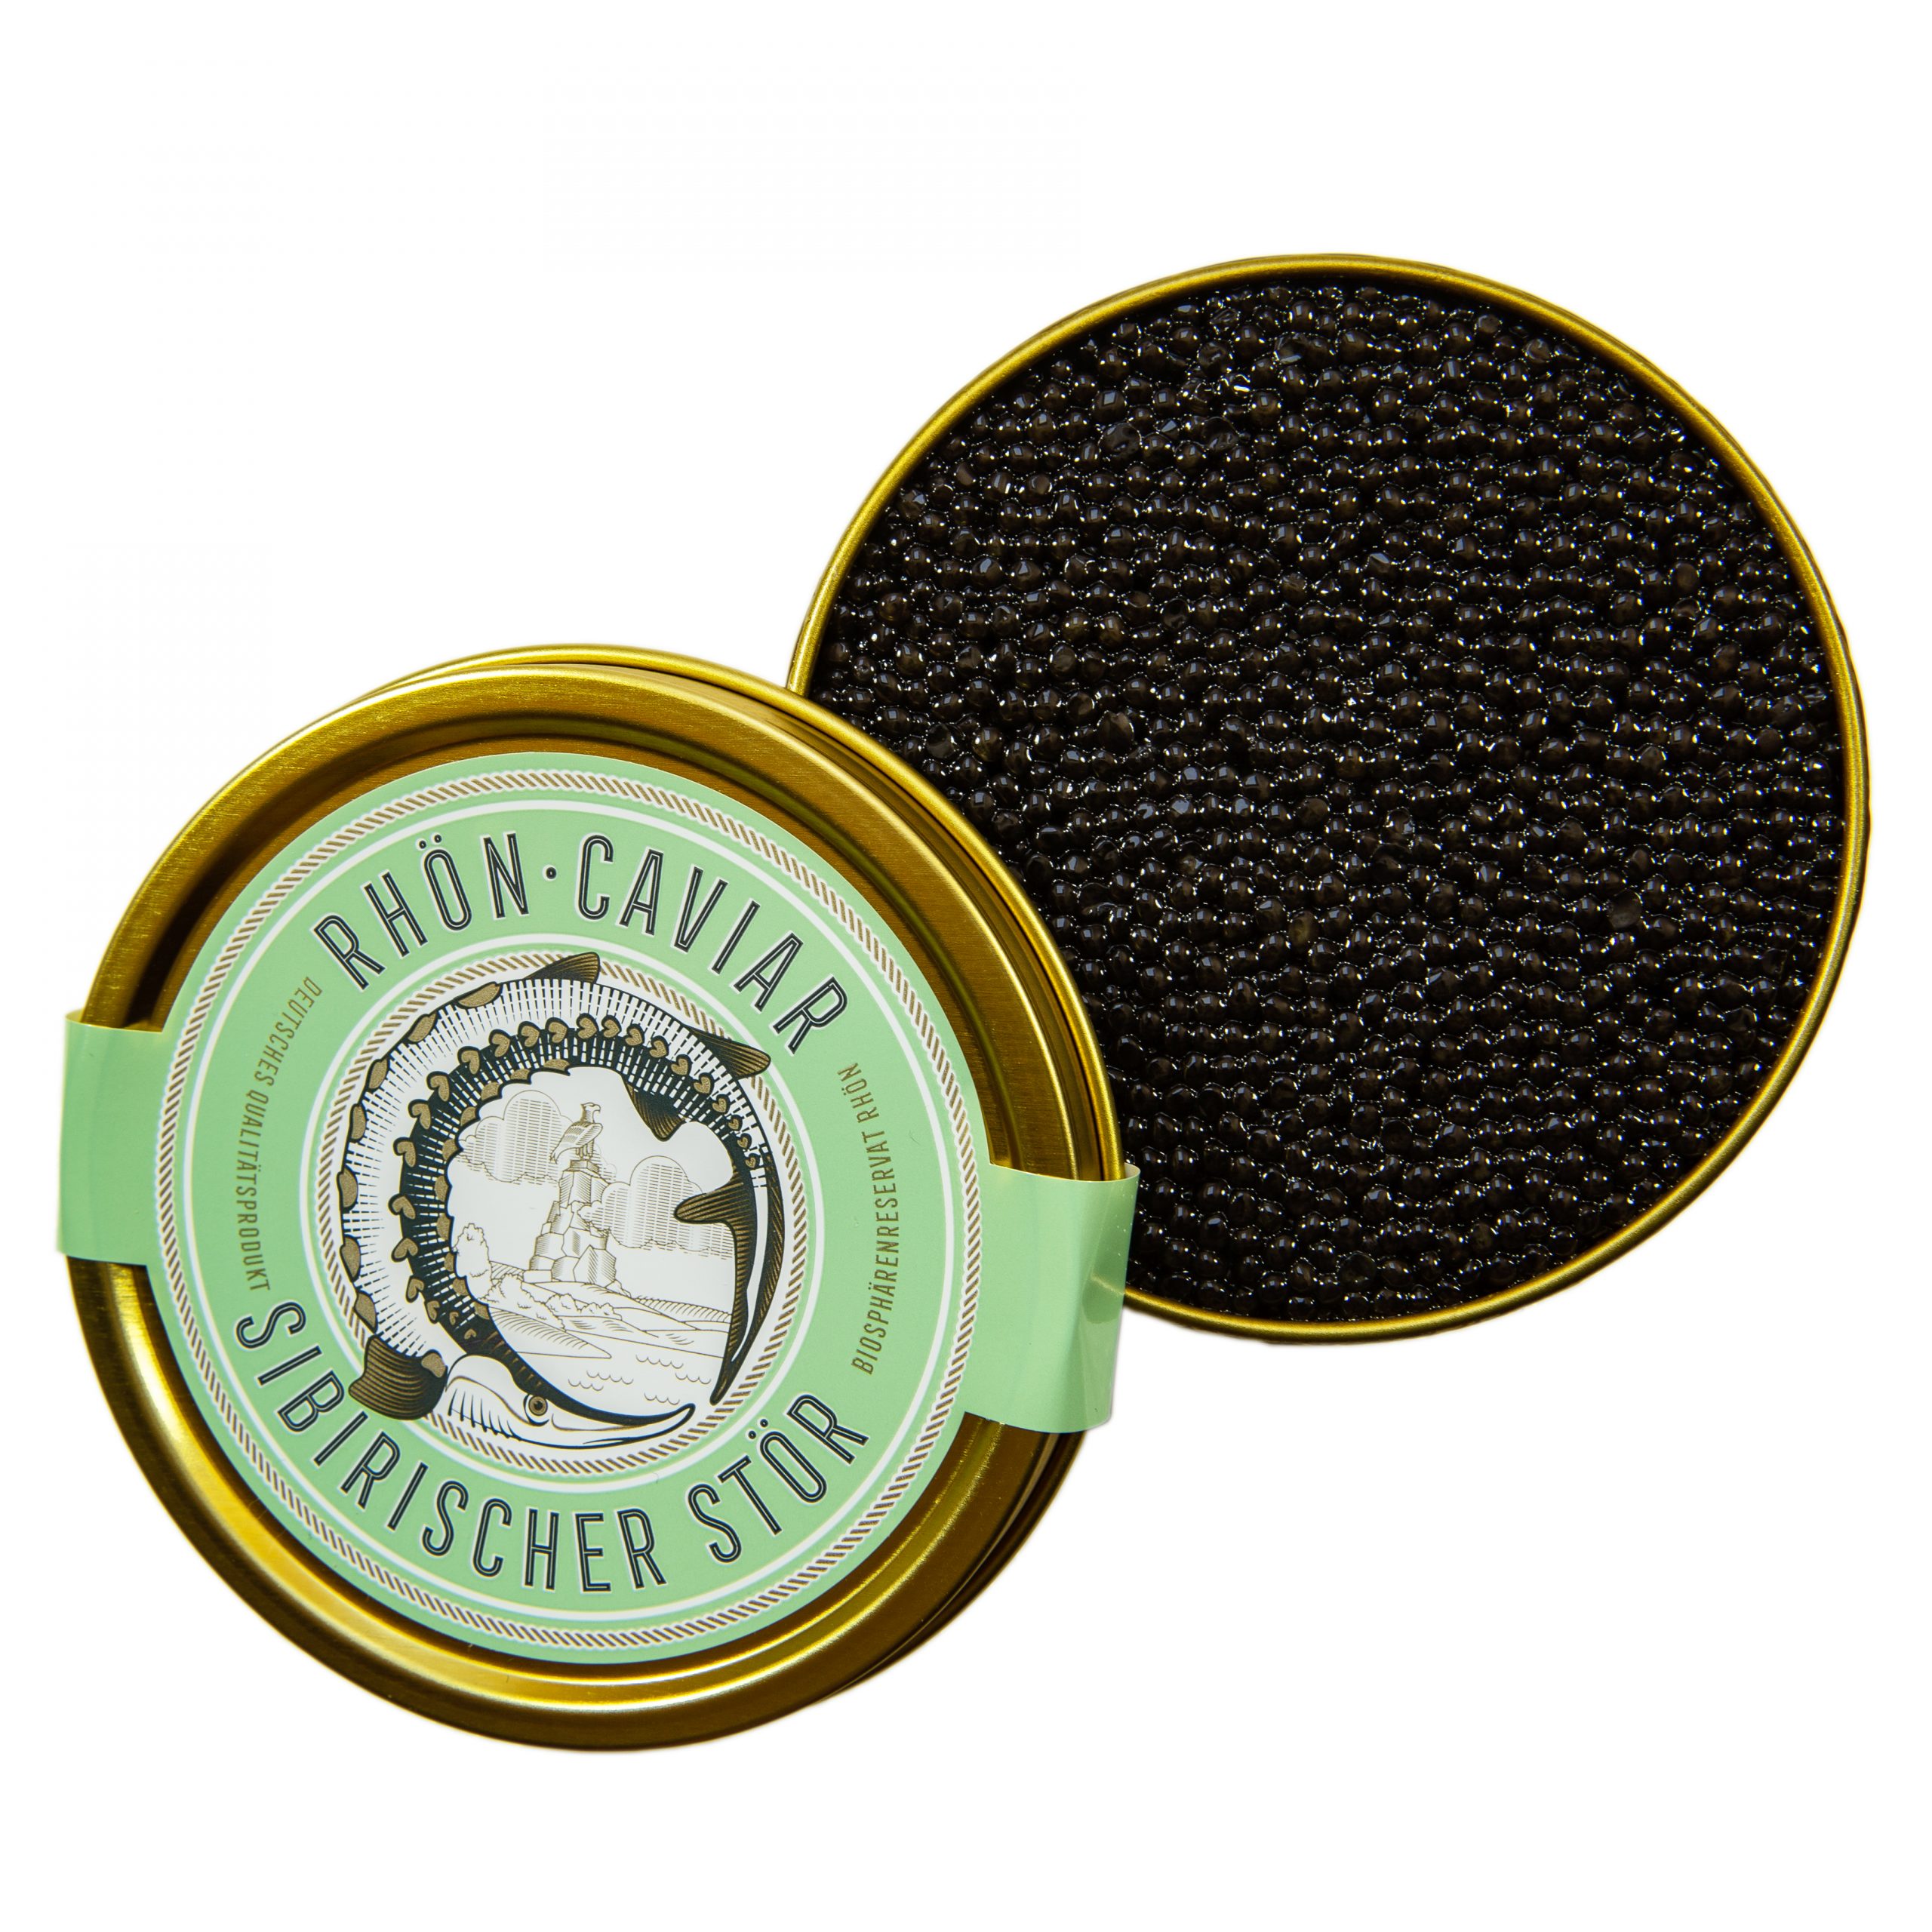 Sibirischer Stör Caviar